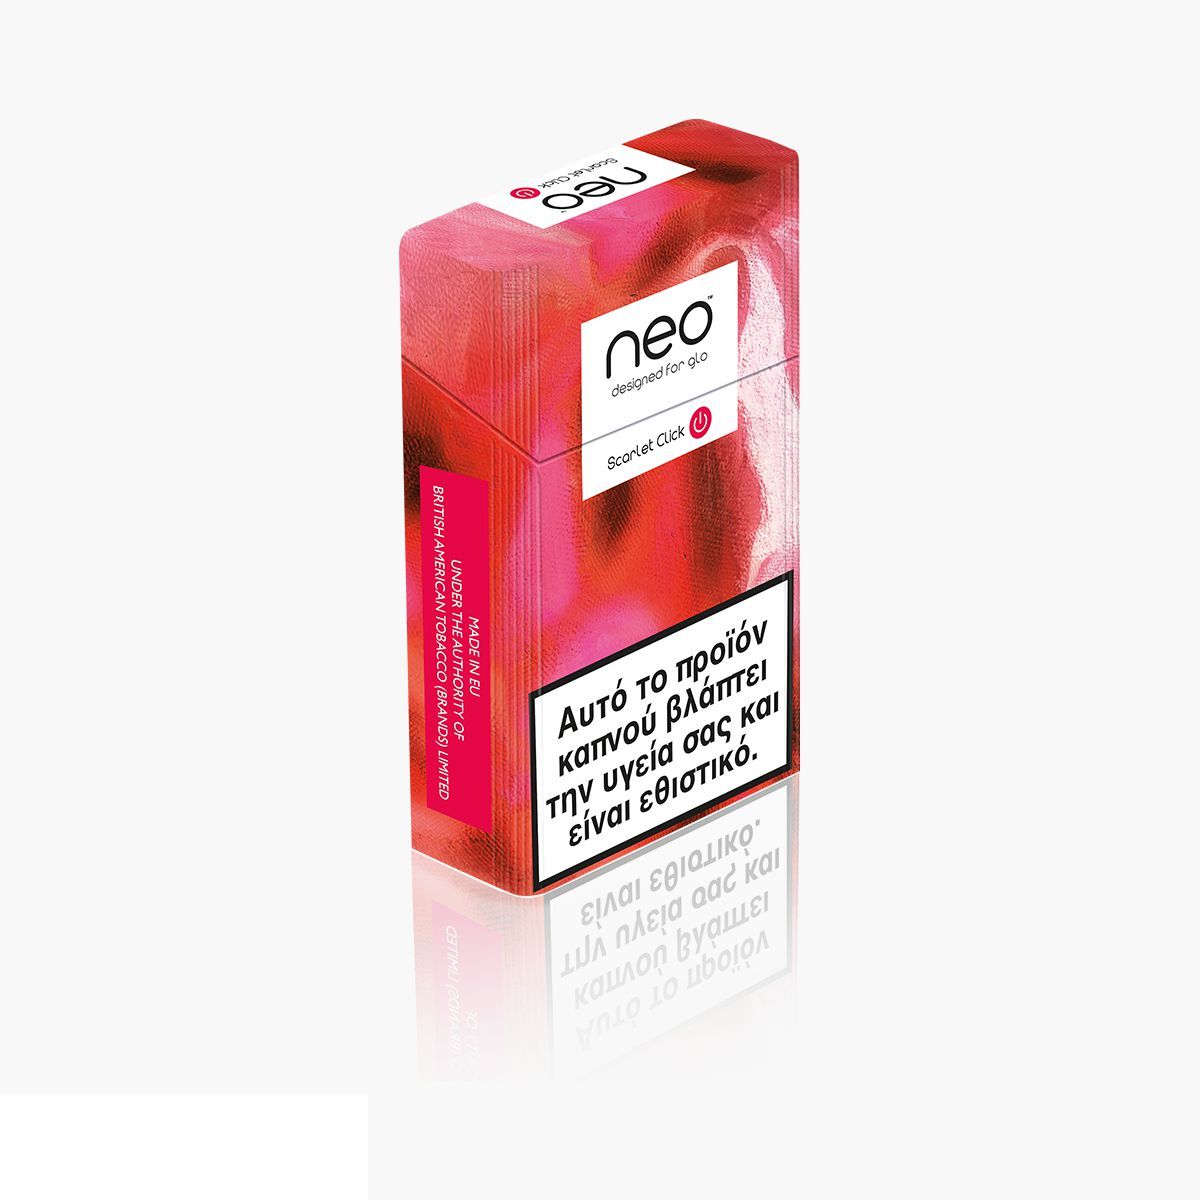 New Glo Hyper Neo Demi Slims Scarlet Heated Tobacco Sticks